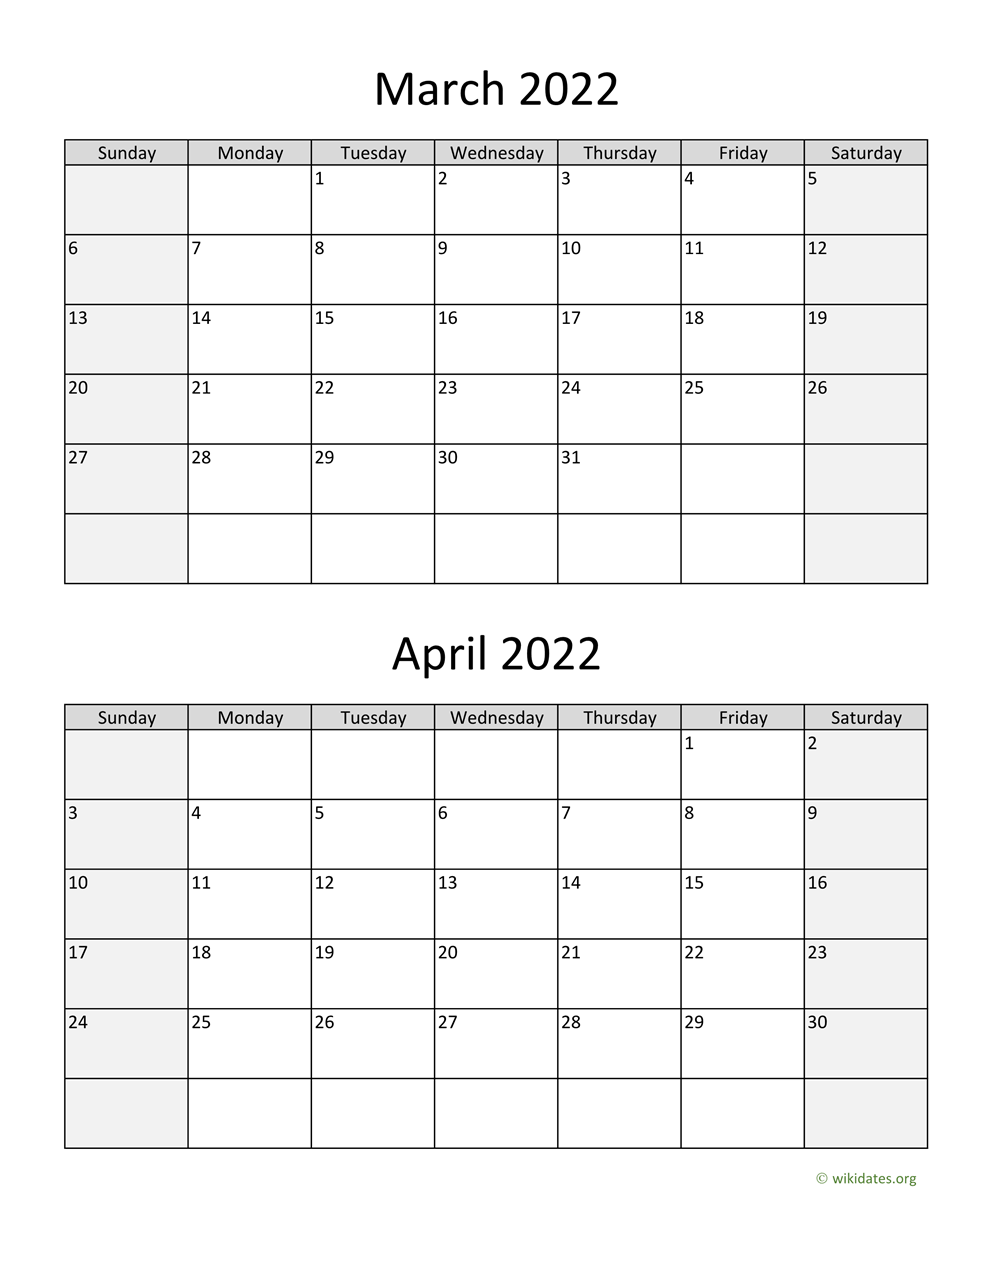 March April Calendar 2022 March And April 2022 Calendar | Wikidates.org